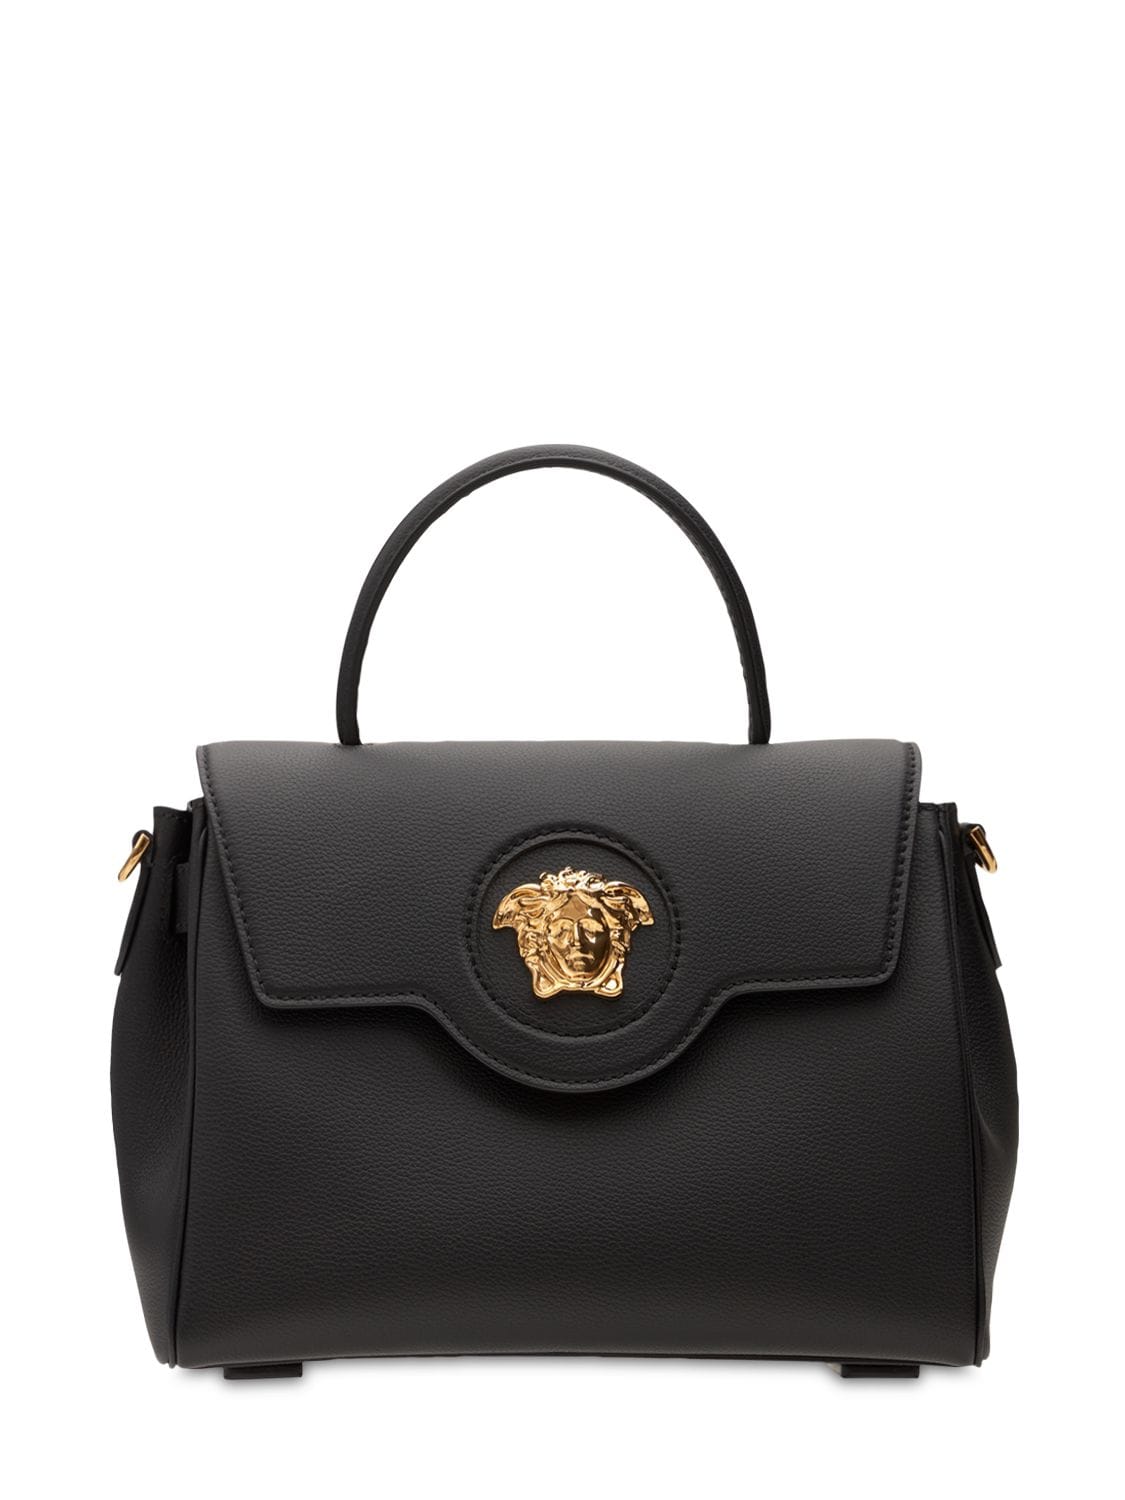 Image of Medusa Leather Top Handle Bag